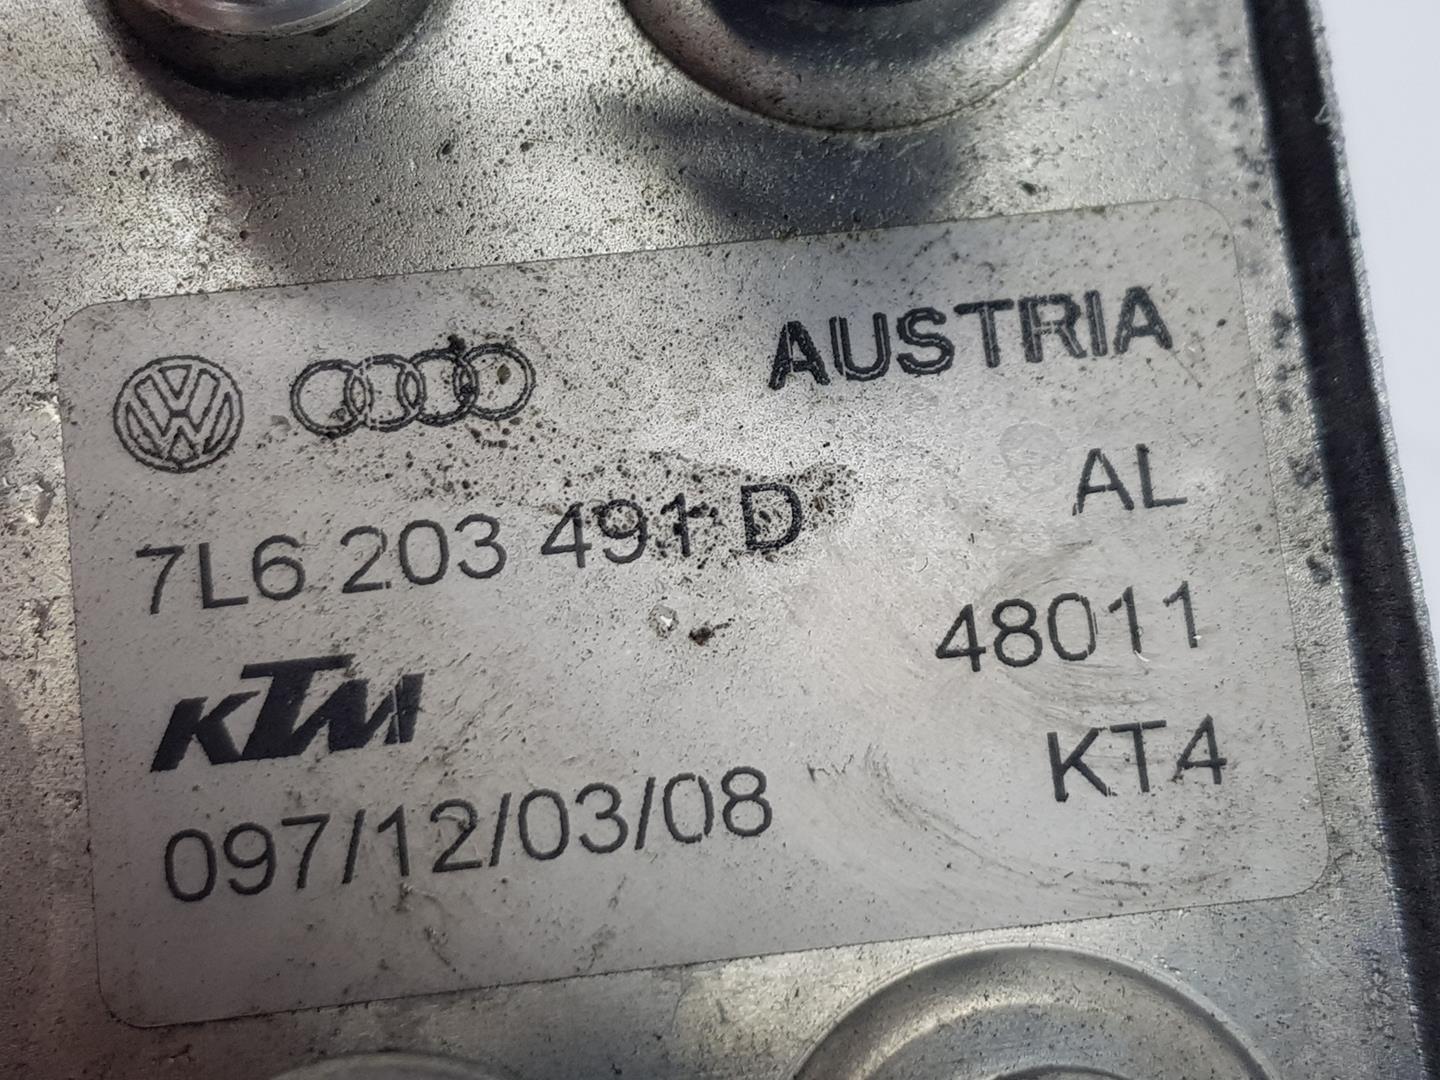 AUDI Q7 4L (2005-2015) Other Engine Compartment Parts 7L6203491D, 7L6203491D 19917495